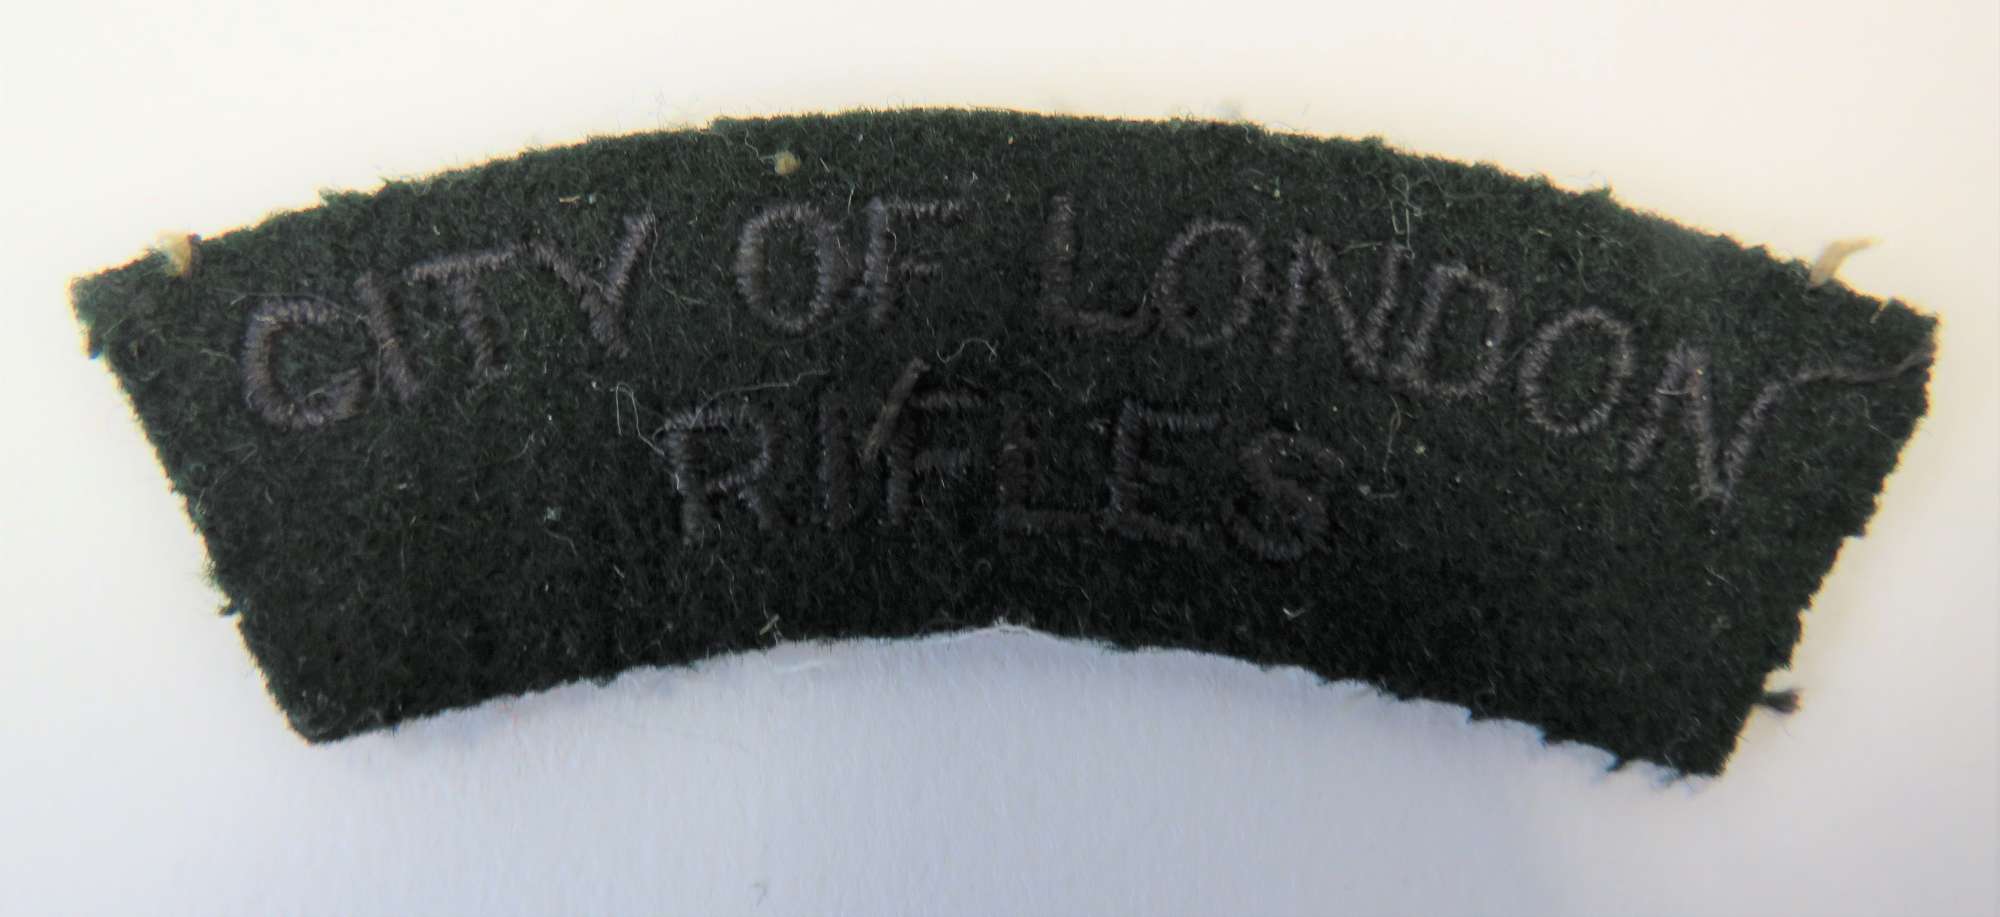 City of London Rifles Title